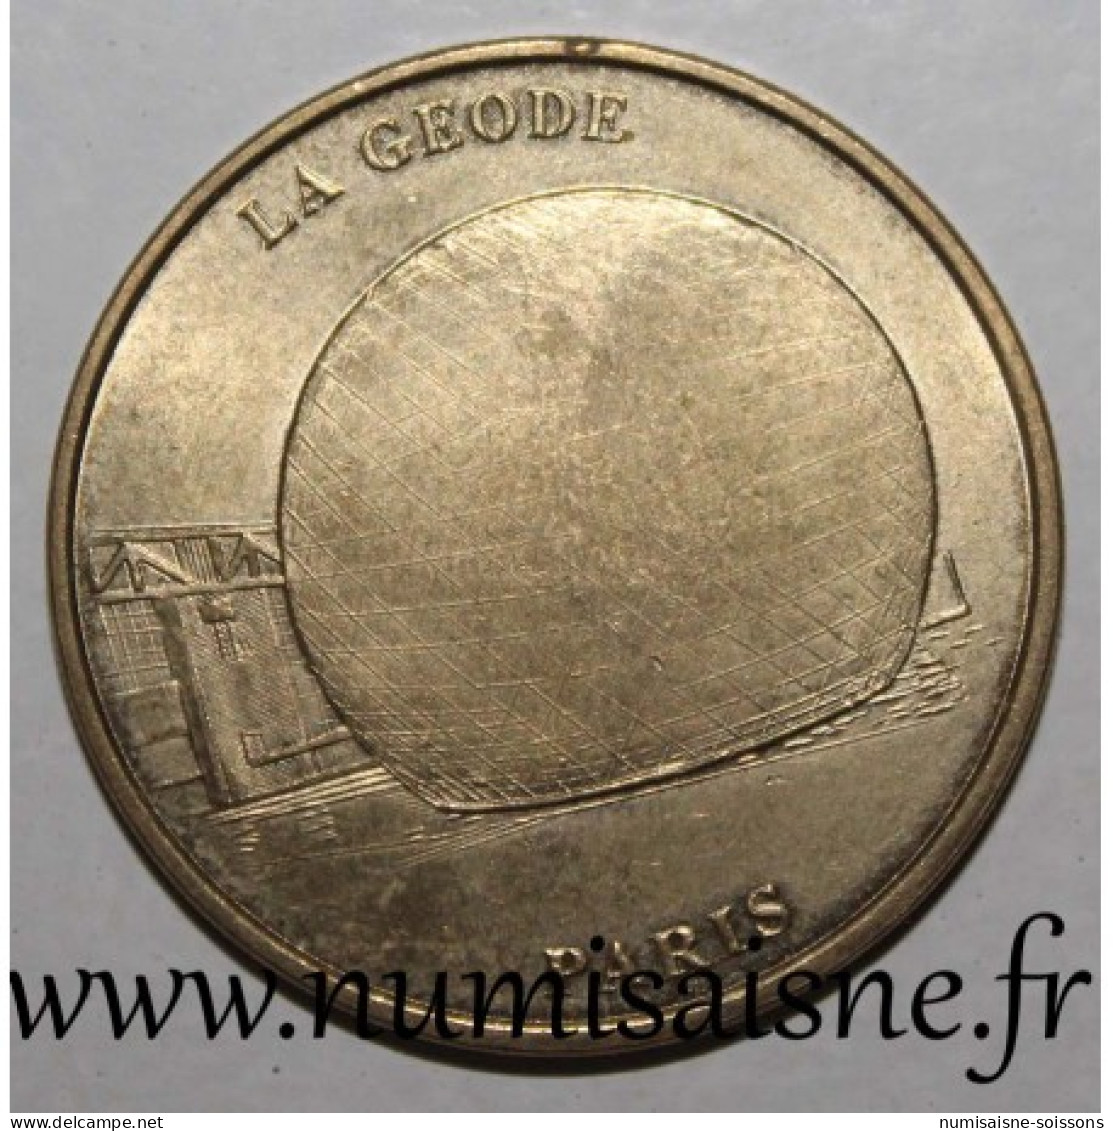 75 - PARIS - LA GEODE - MDP - 1998 - Undated